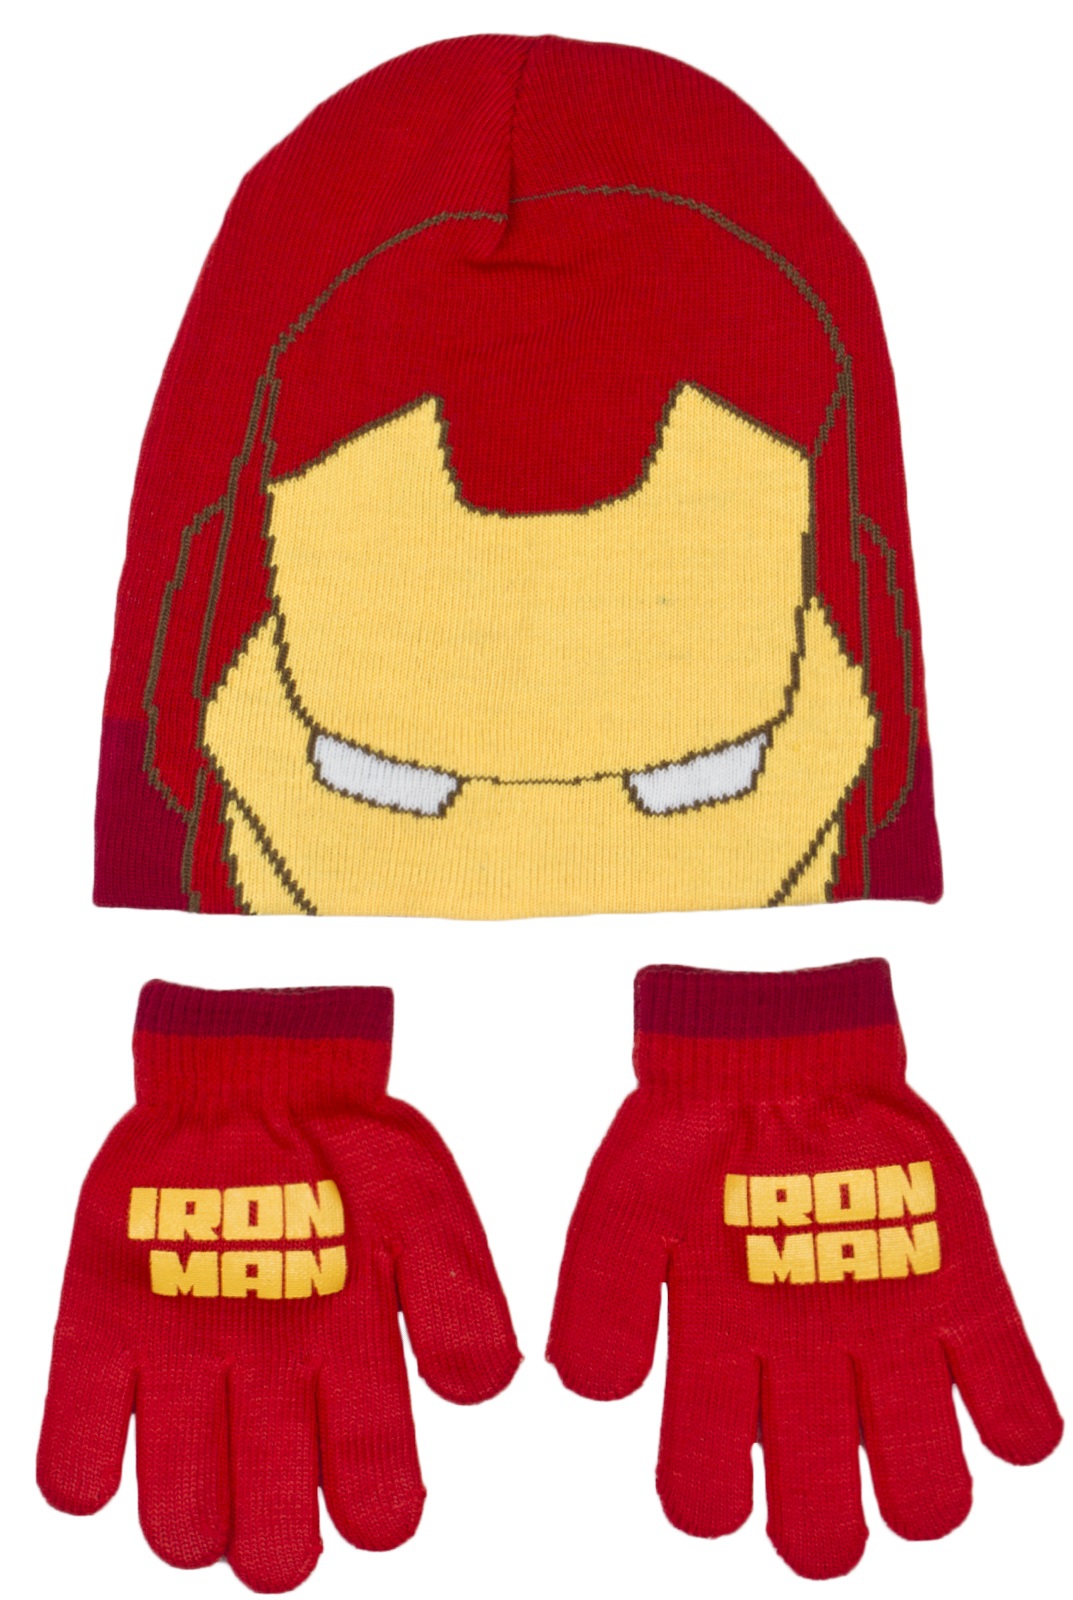 Avengers Boys 'Iron Man' 2 Piece Winter Set Hat & Glove One Size Kids Accessories